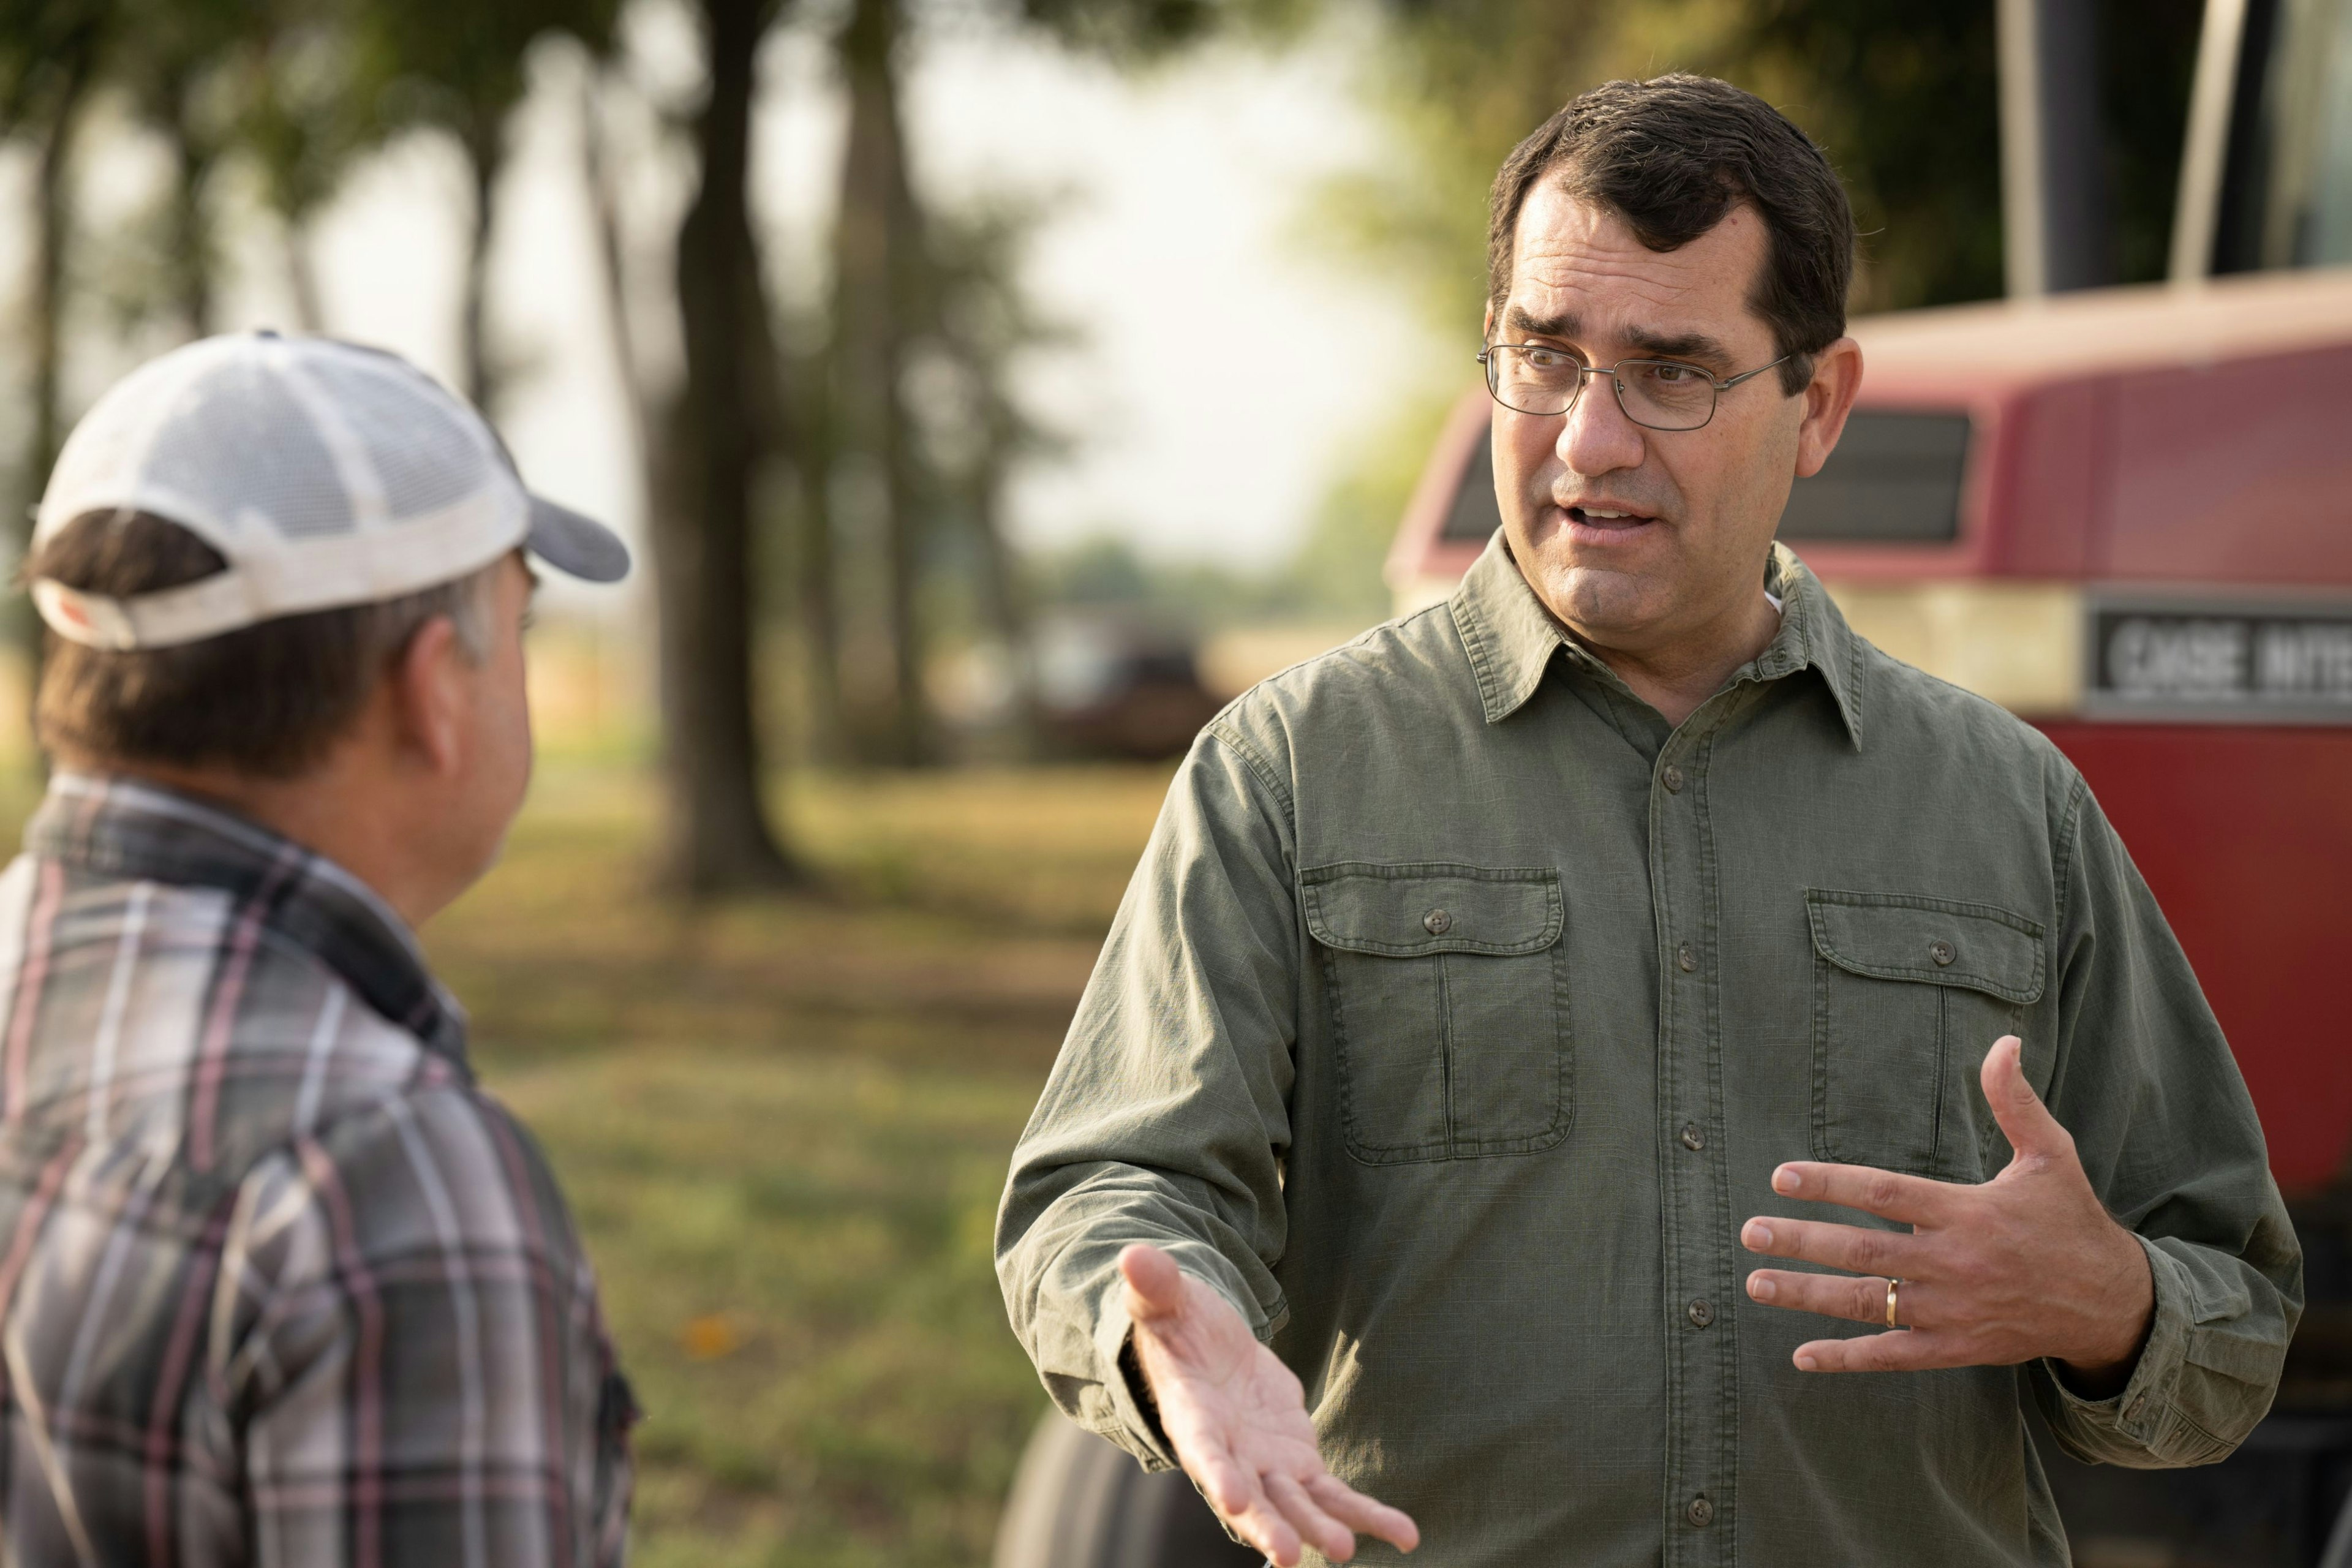 Derek Schmidt talking with a farmer